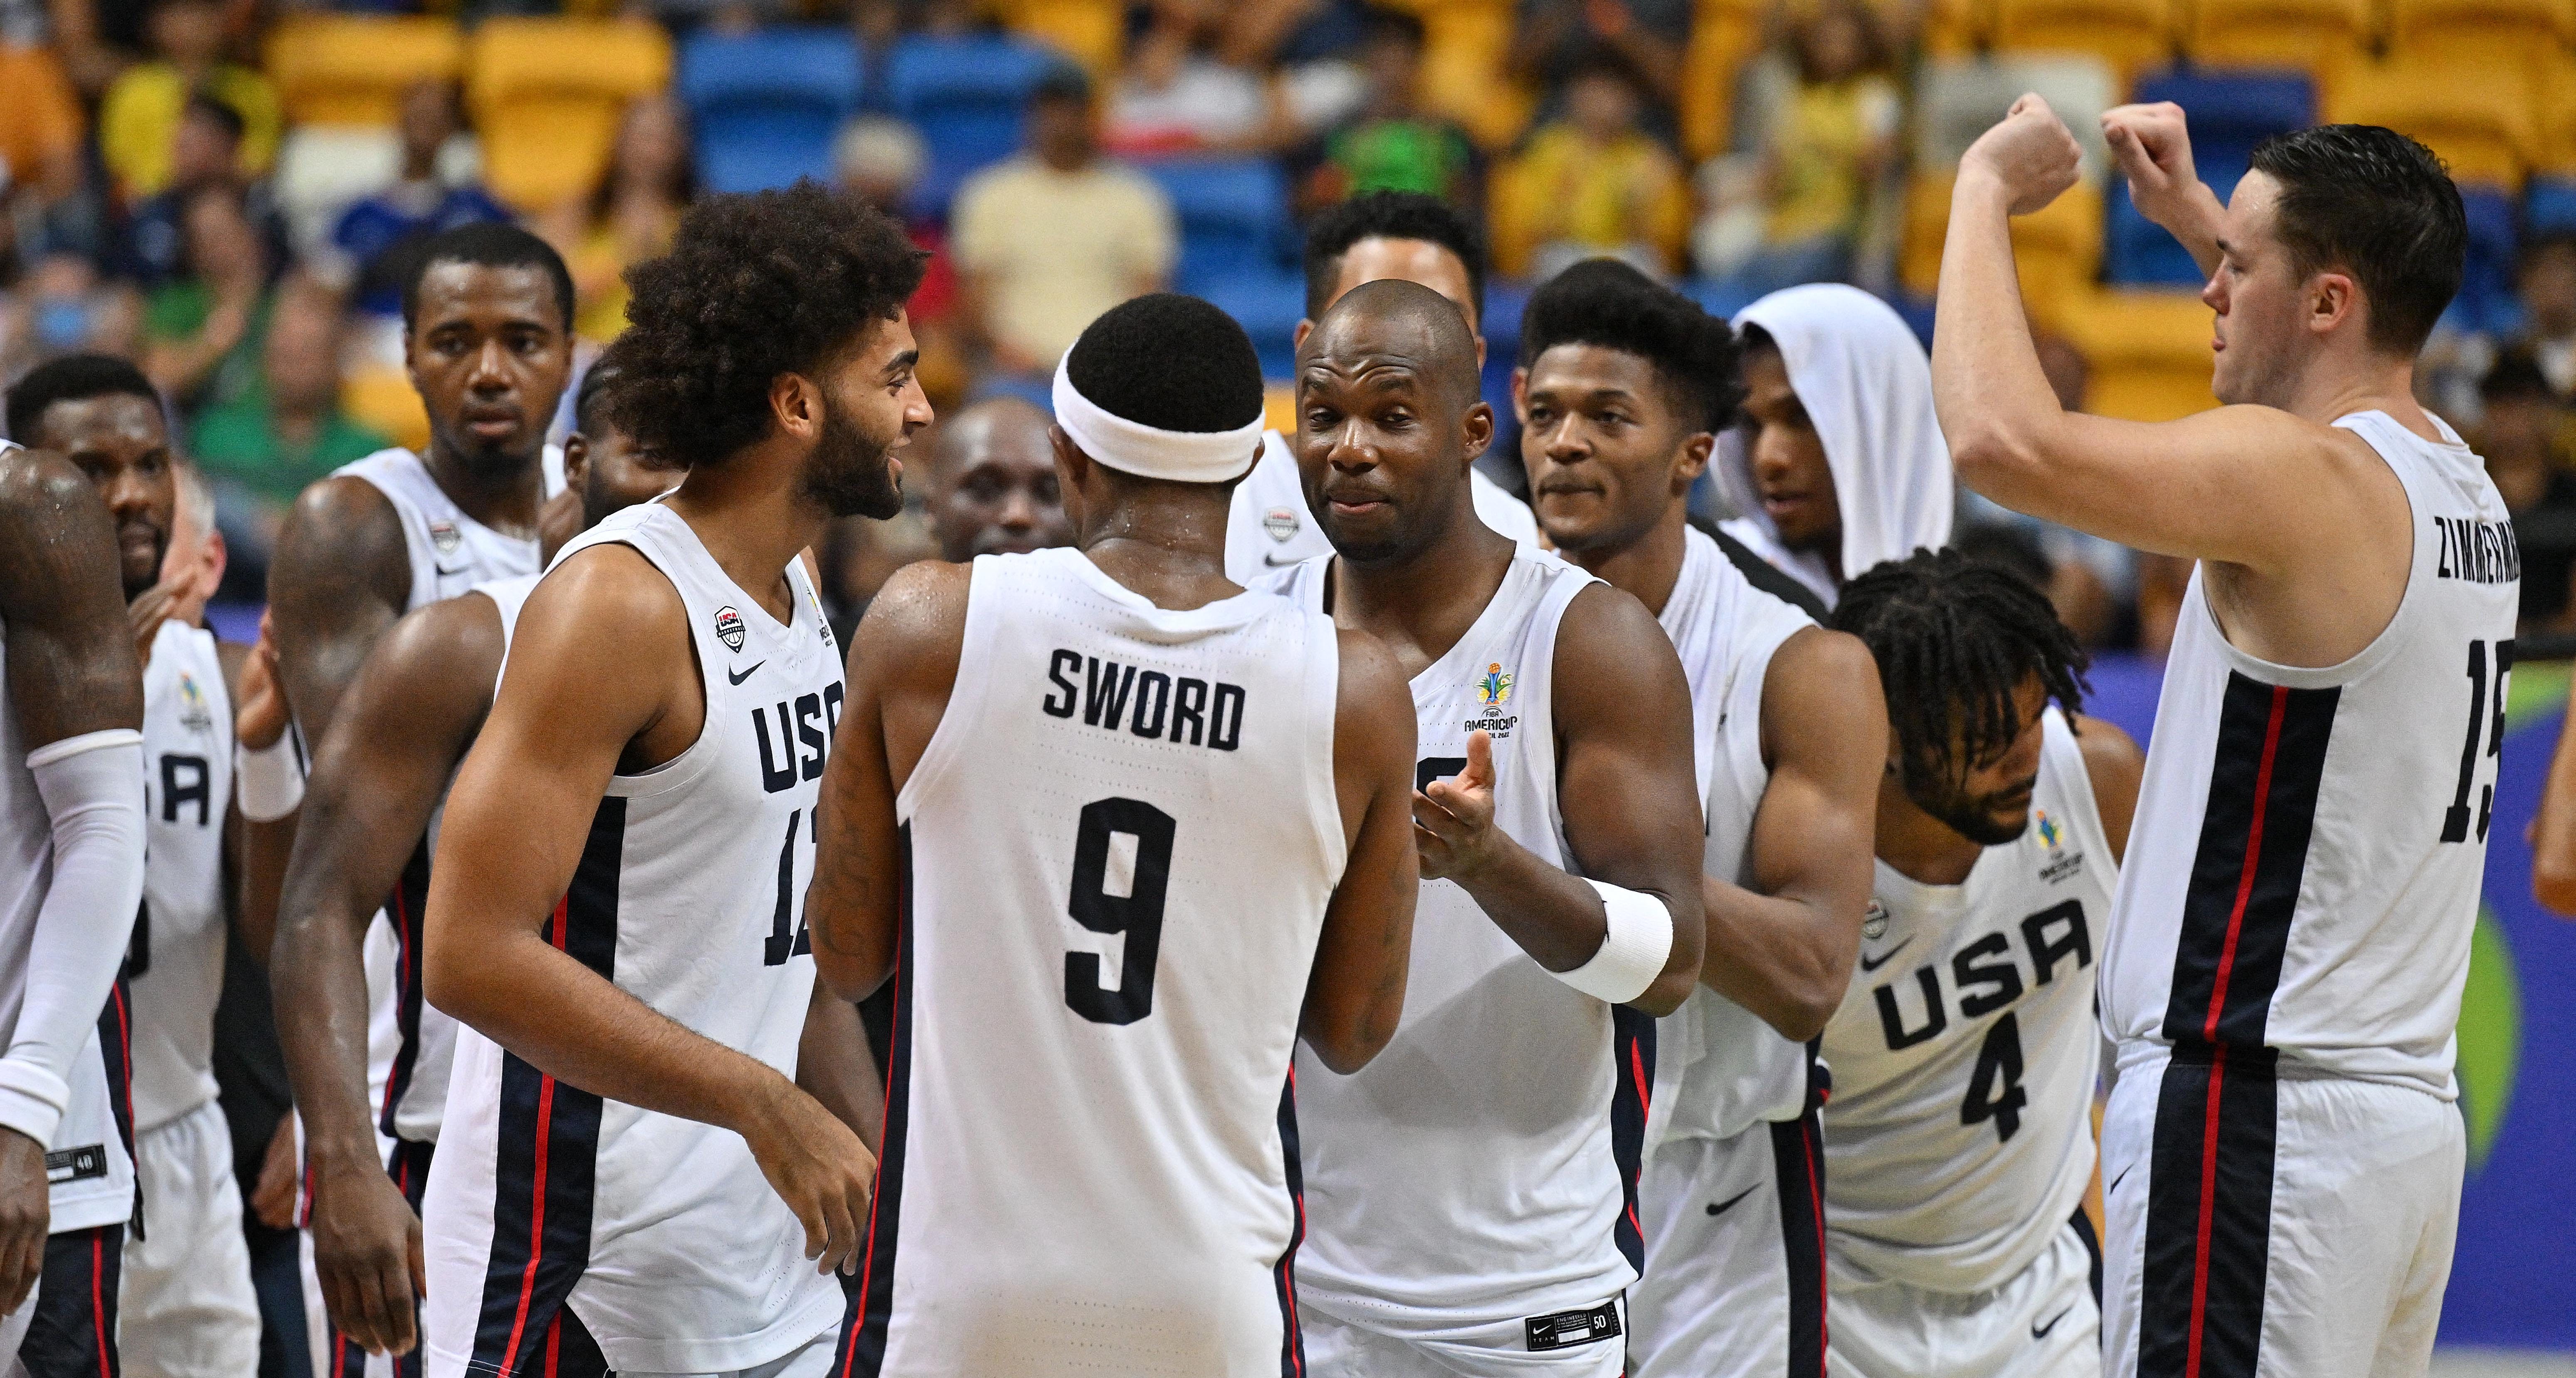 USA Basketball Wins Bronze at FIBA AmeriCup, Argentina Earns Gold Over Brazil